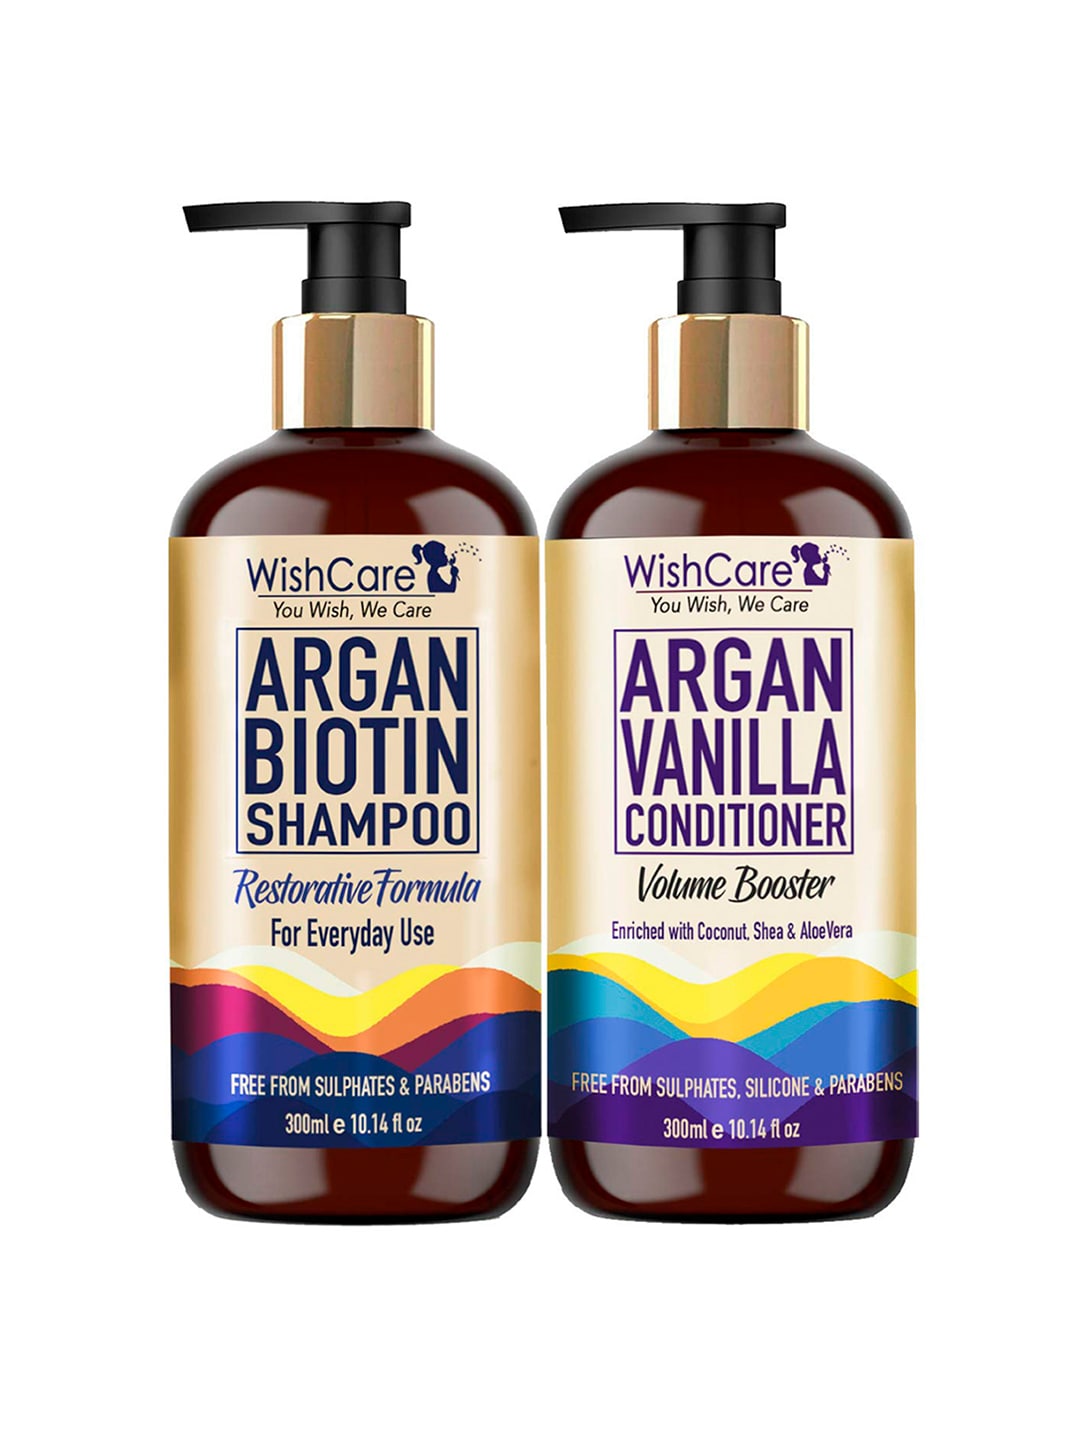 WishCare Argan Biotin Shampoo and Argan Vanilla Conditioner - 300 ml each Price in India